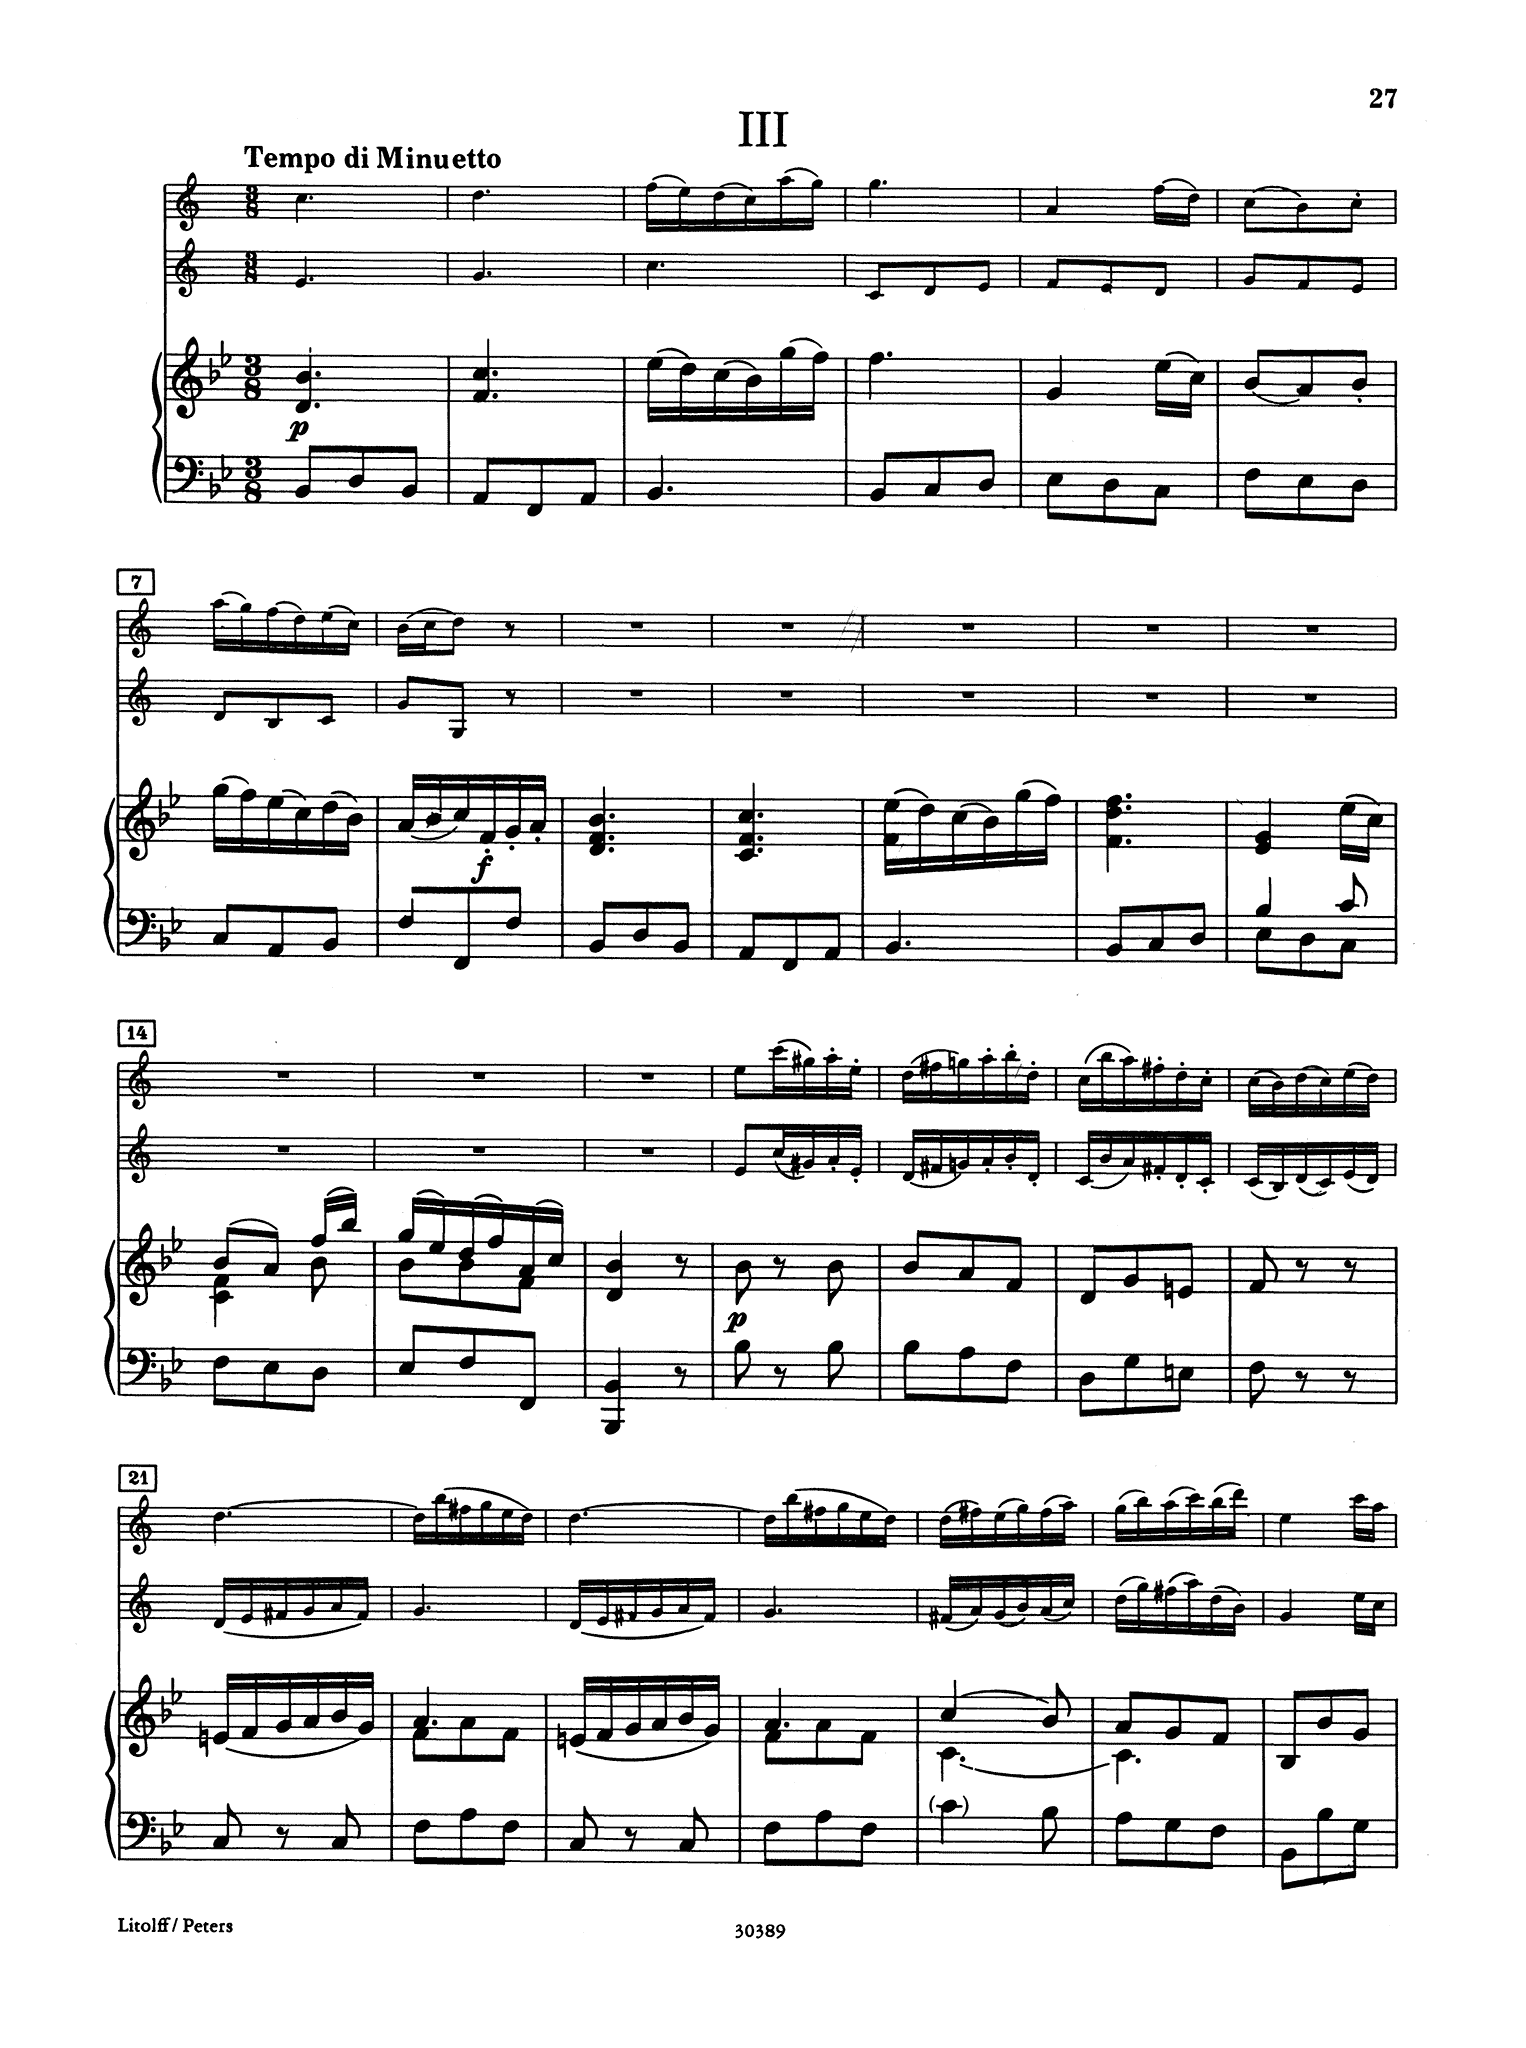 Carl Stamitz Concerto for 2 Clarinets B-flat Major Sieber No. 4 - Movement 3